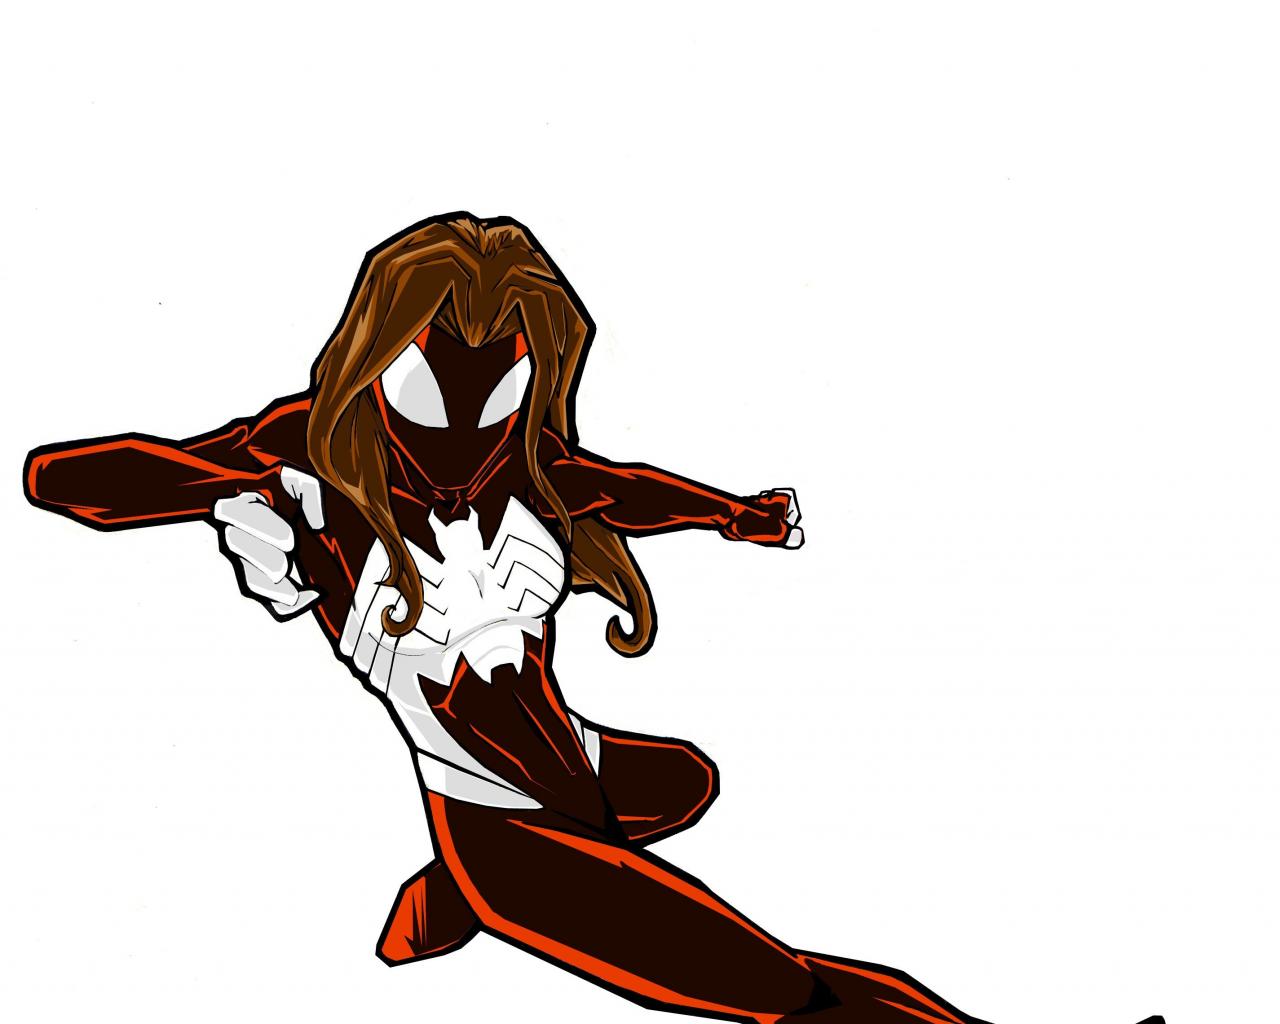  superheroes marvel comics ultimate spider woman jessica drew wallpaper